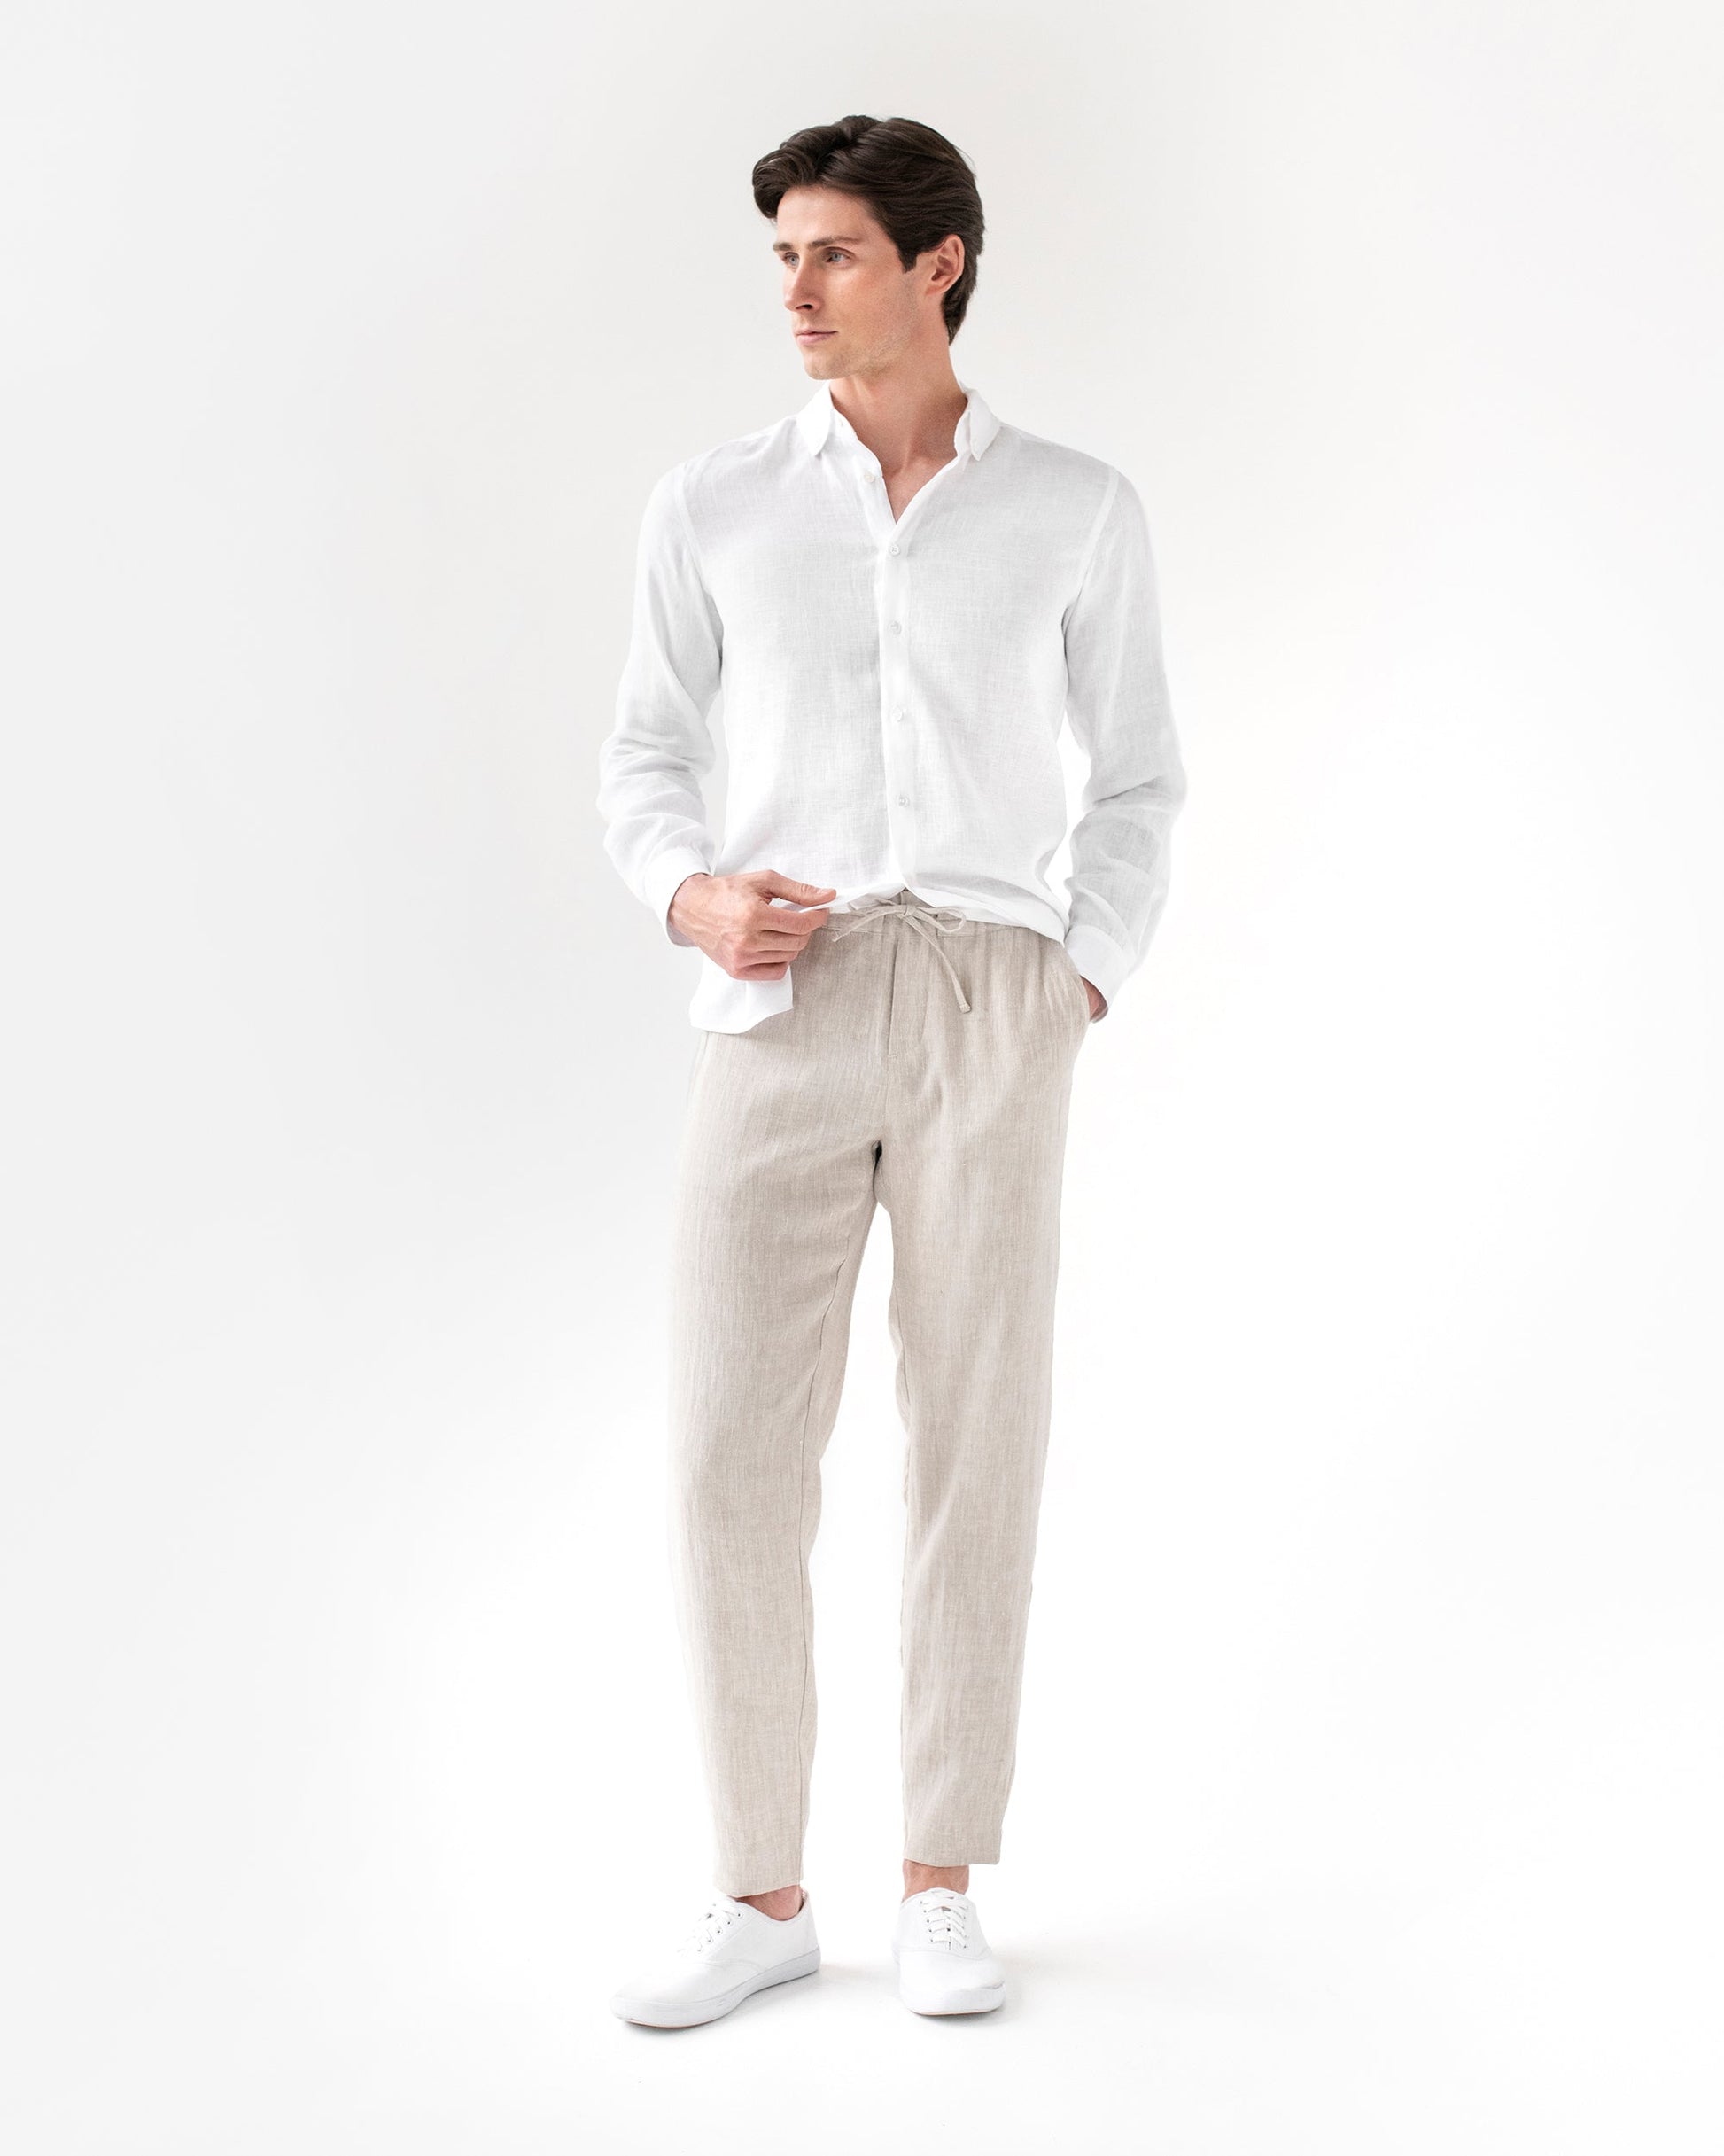 Men's linen pants PALERMO in Natural melange - MagicLinen